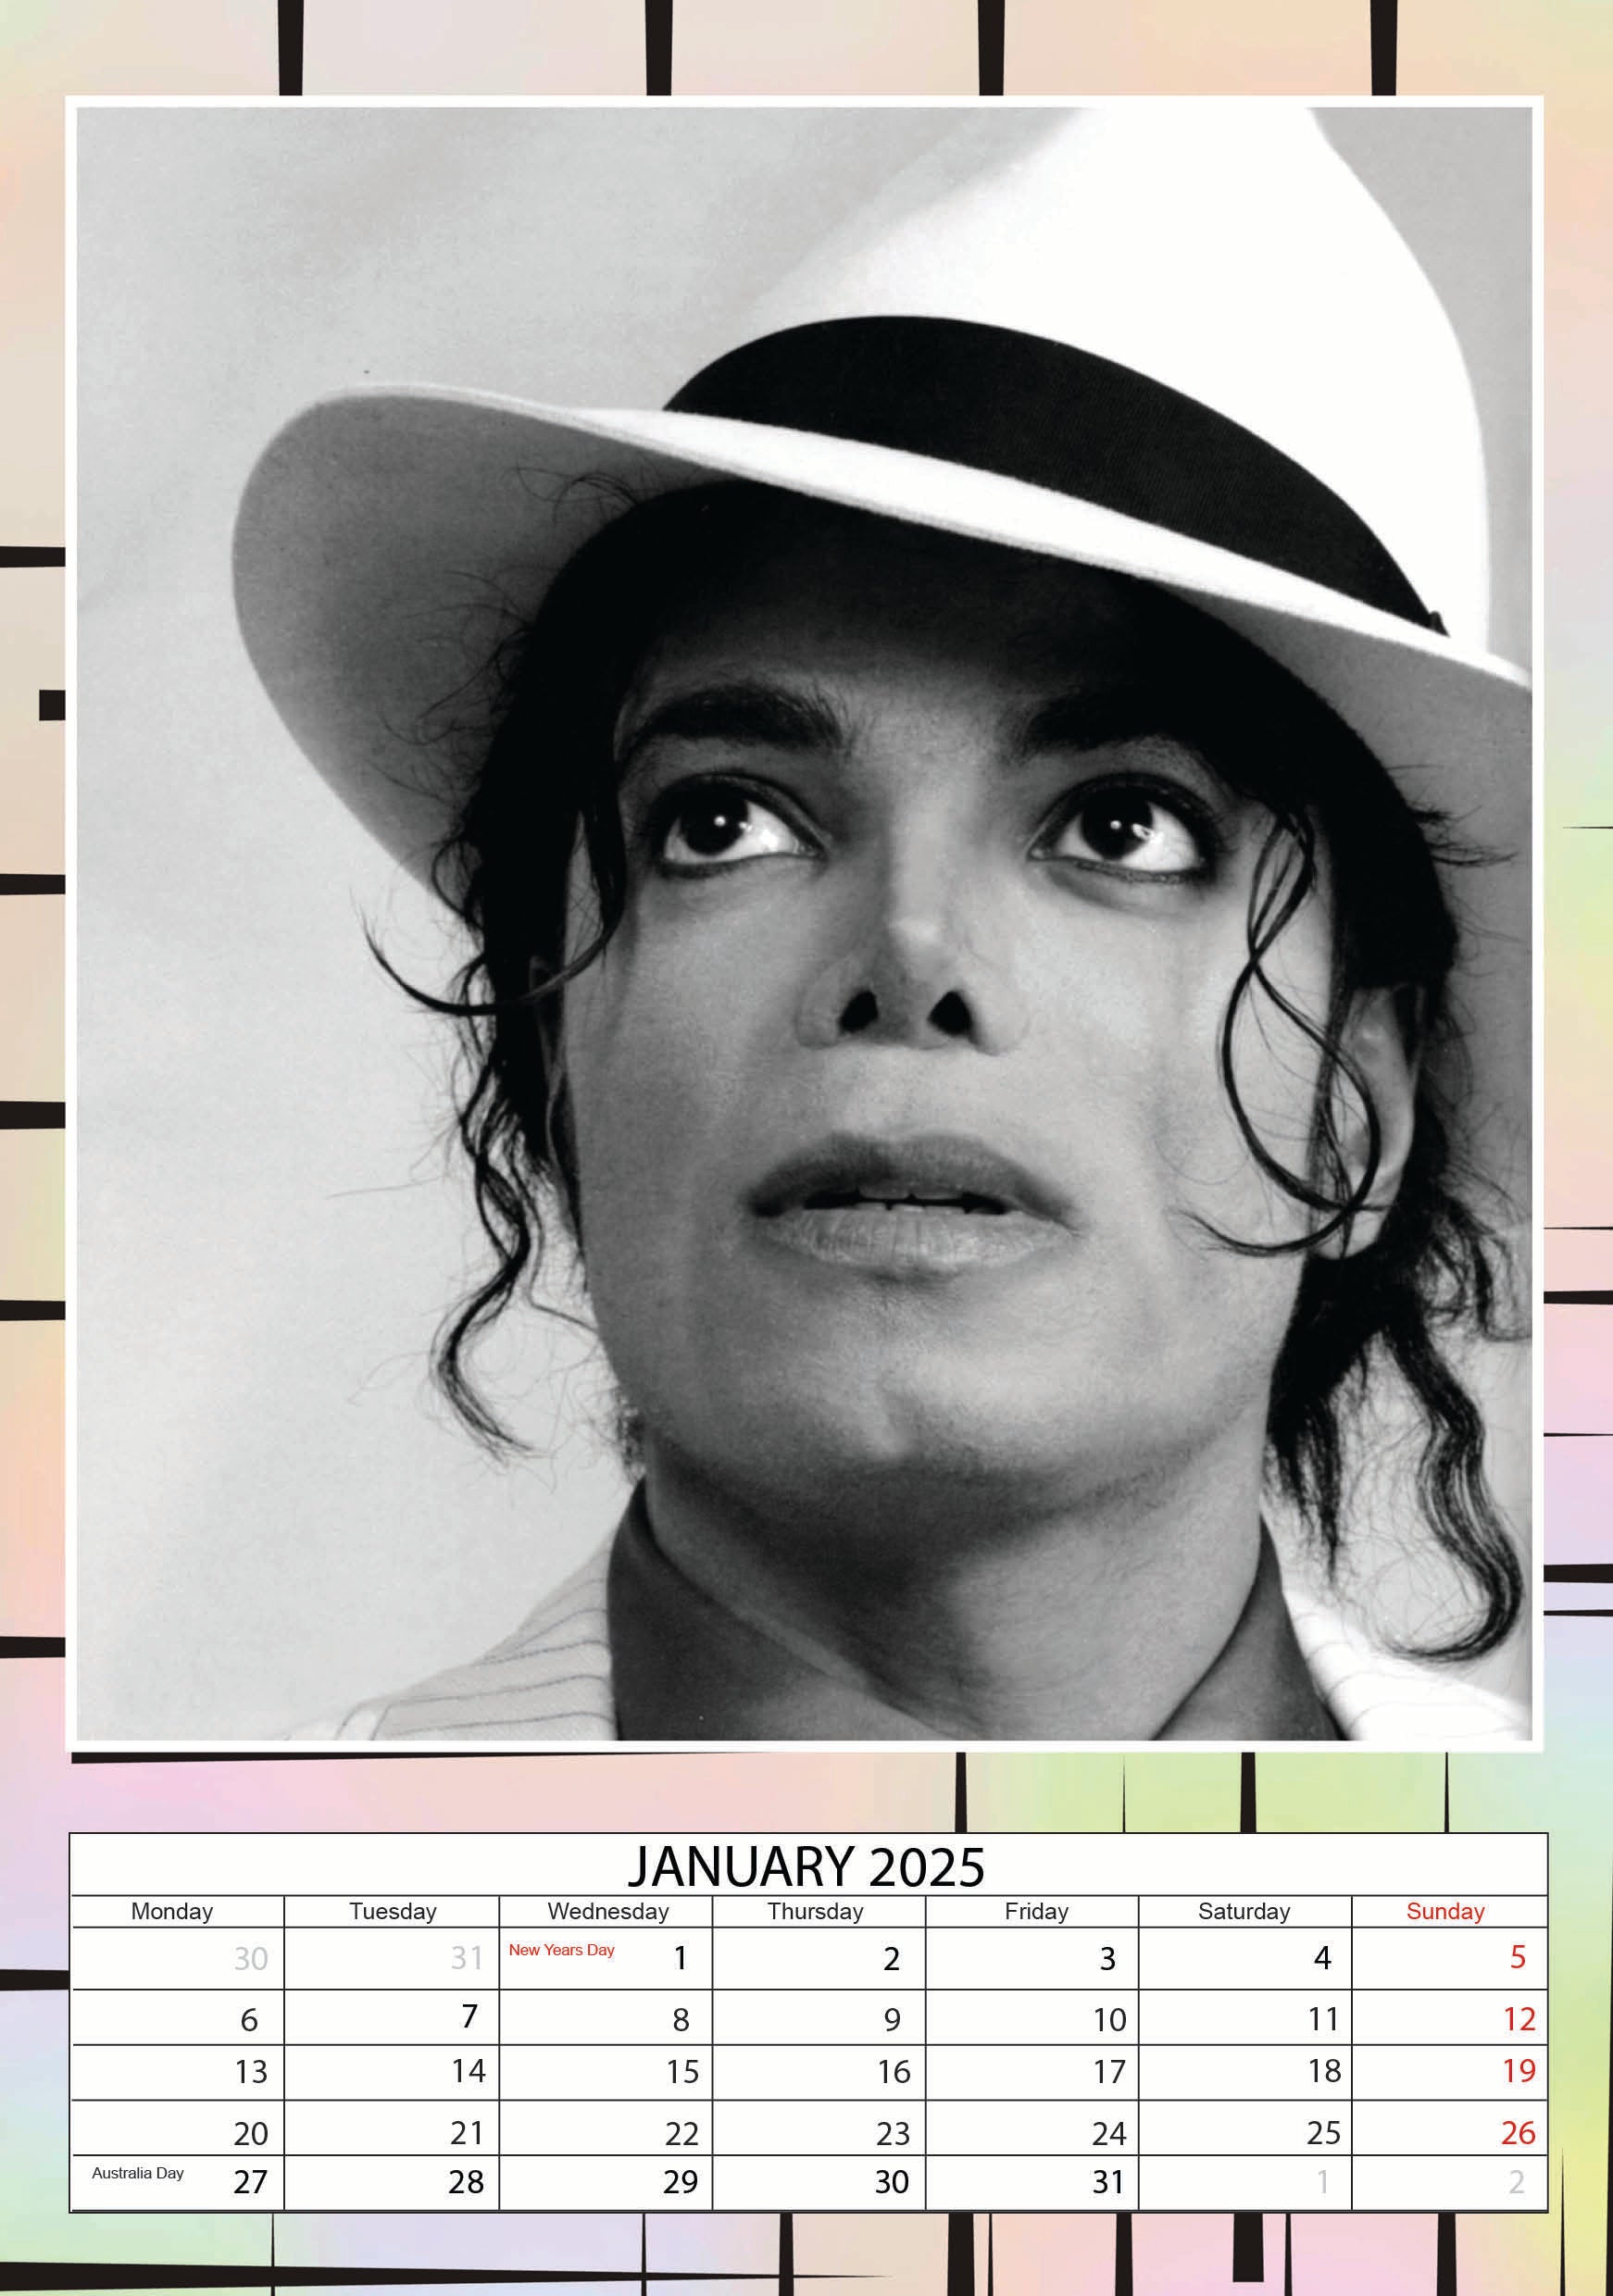 2025 Michael Jackson - A3 Wall Calendar